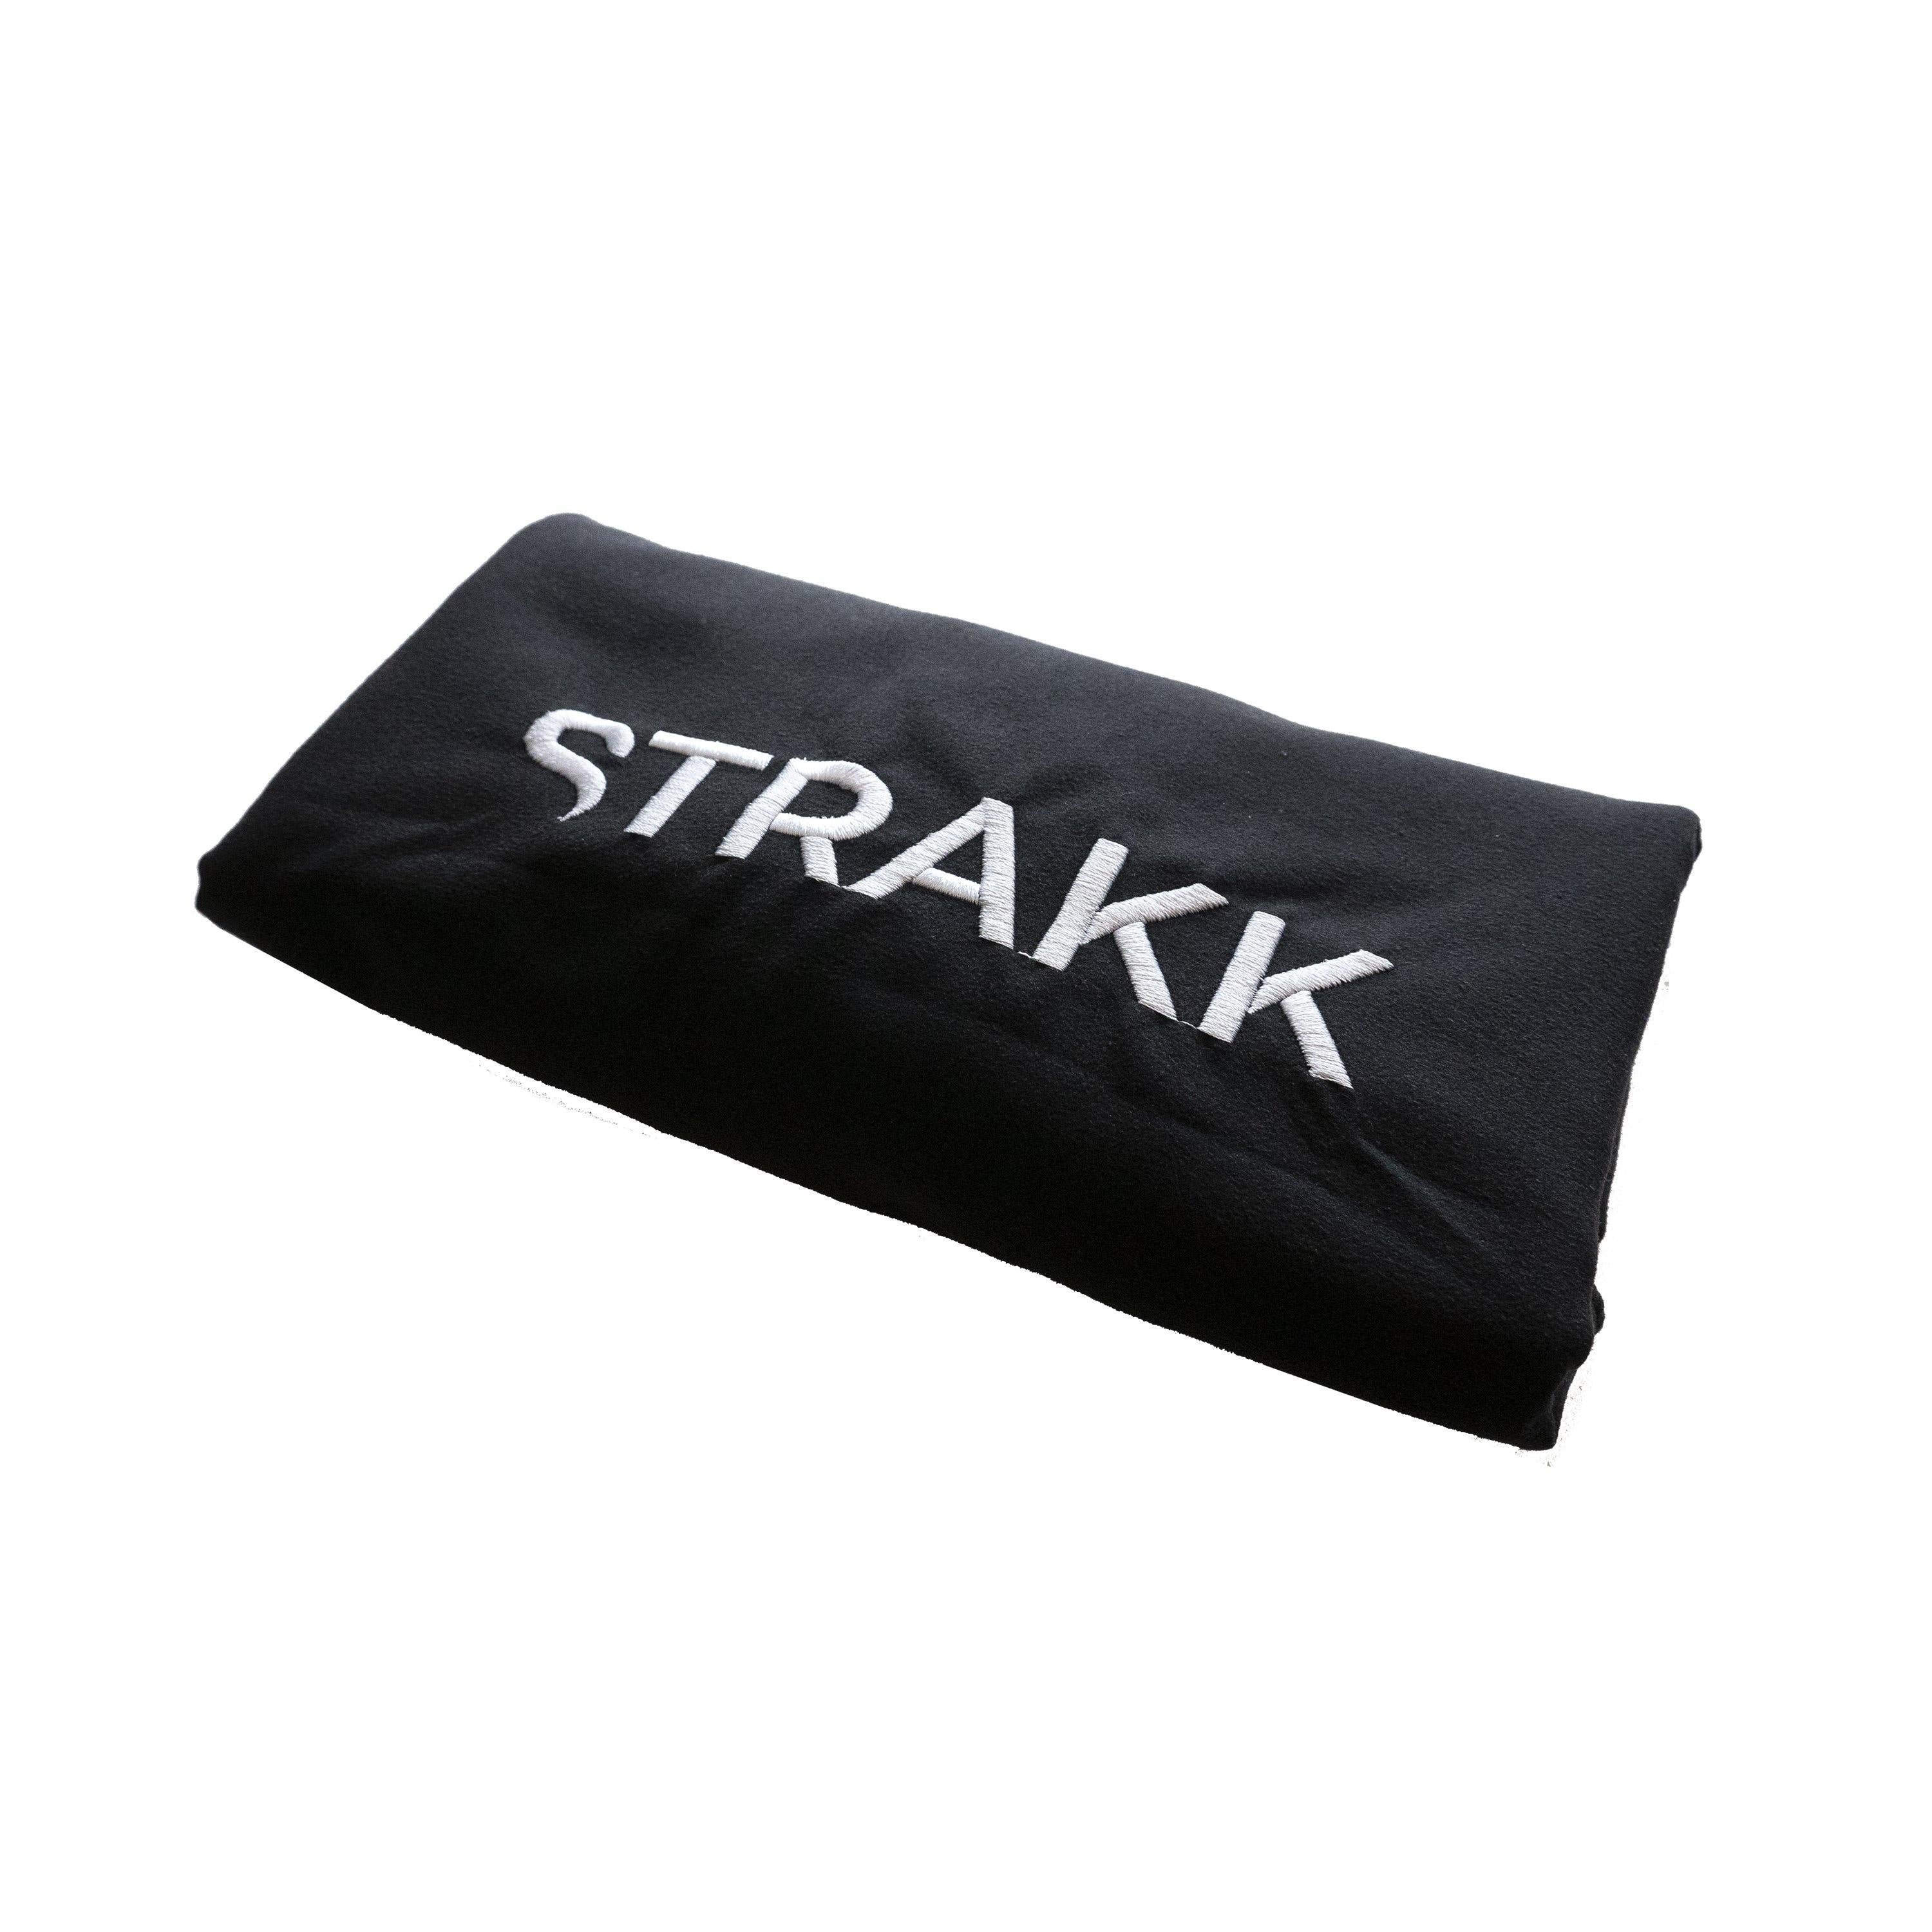 Training Microfiber Towel - Strakk